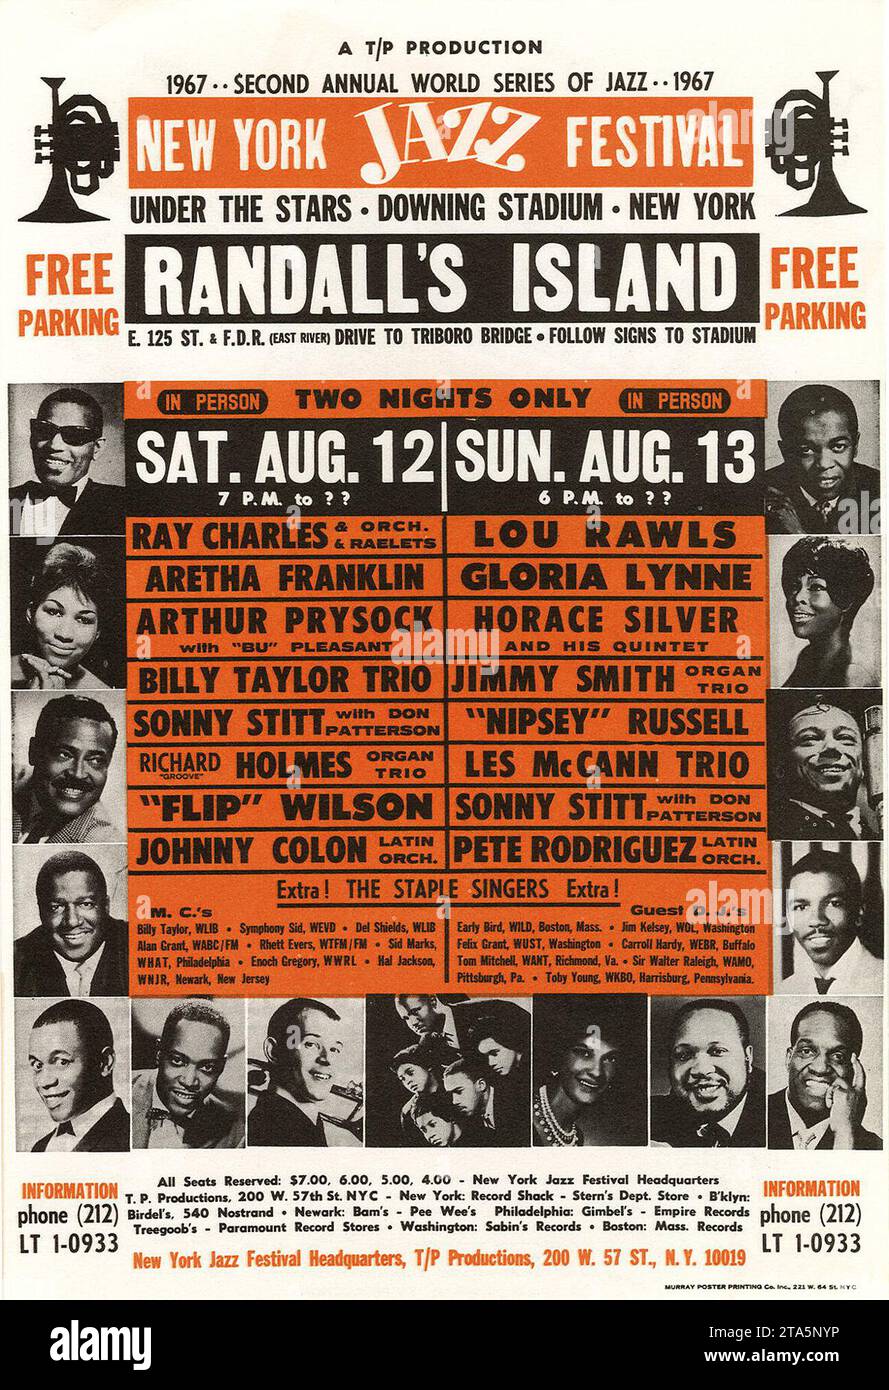 RANDALLS ISLAND - Ray Charles, Aretha Franklin New York Jazz Festival handbill - flyer - 1967 Stock Photo